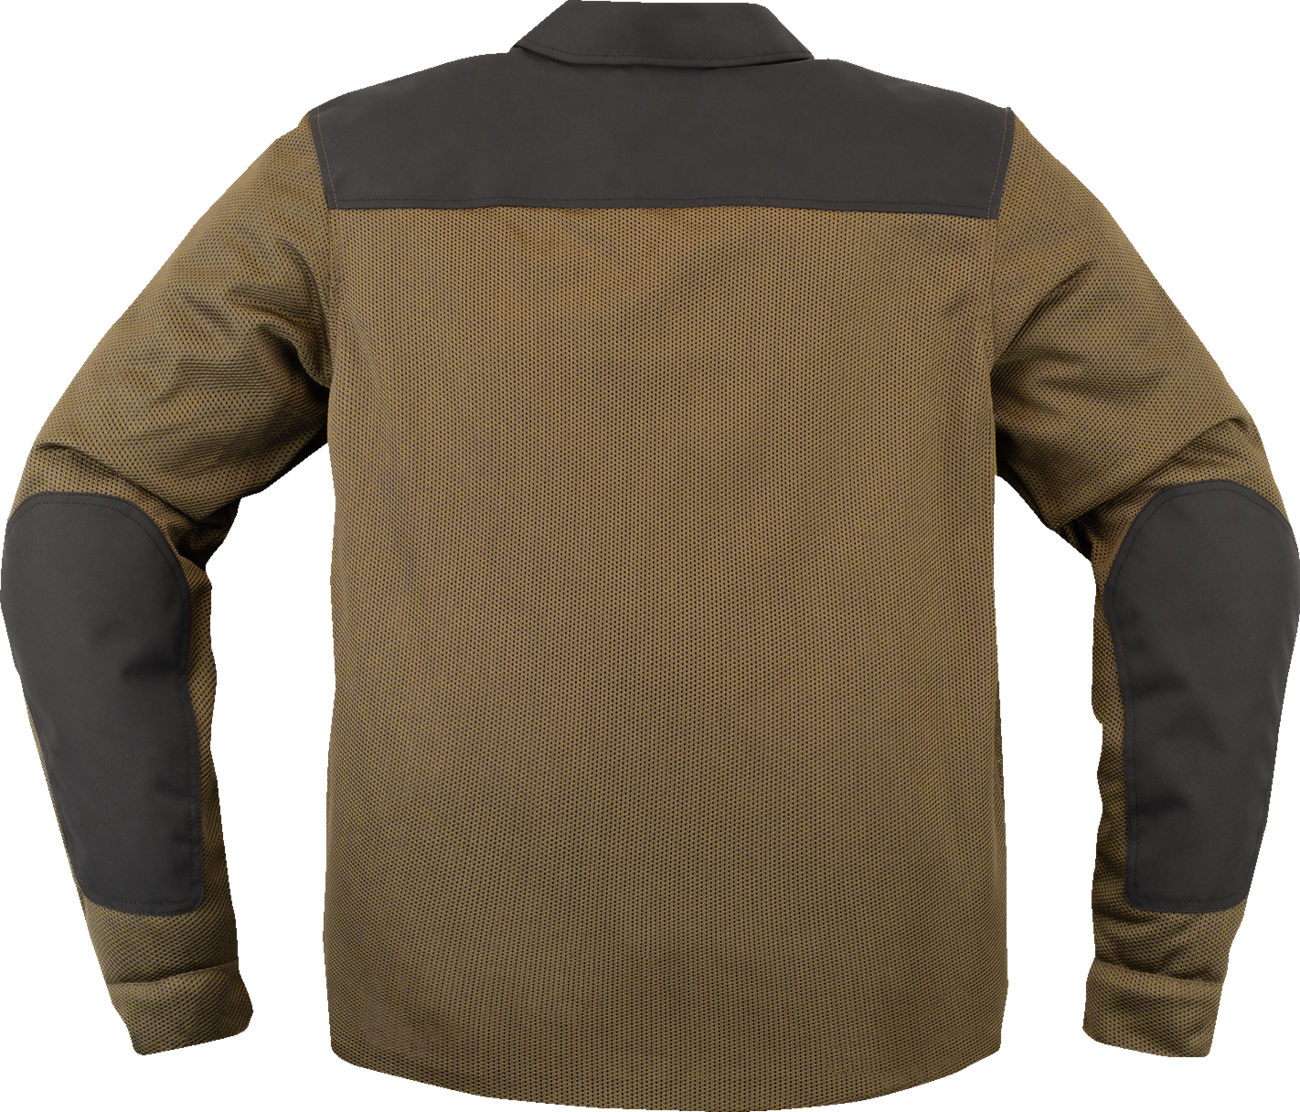 ICON Upstate Mesh CE Jacket - Green - Medium 2820-6230